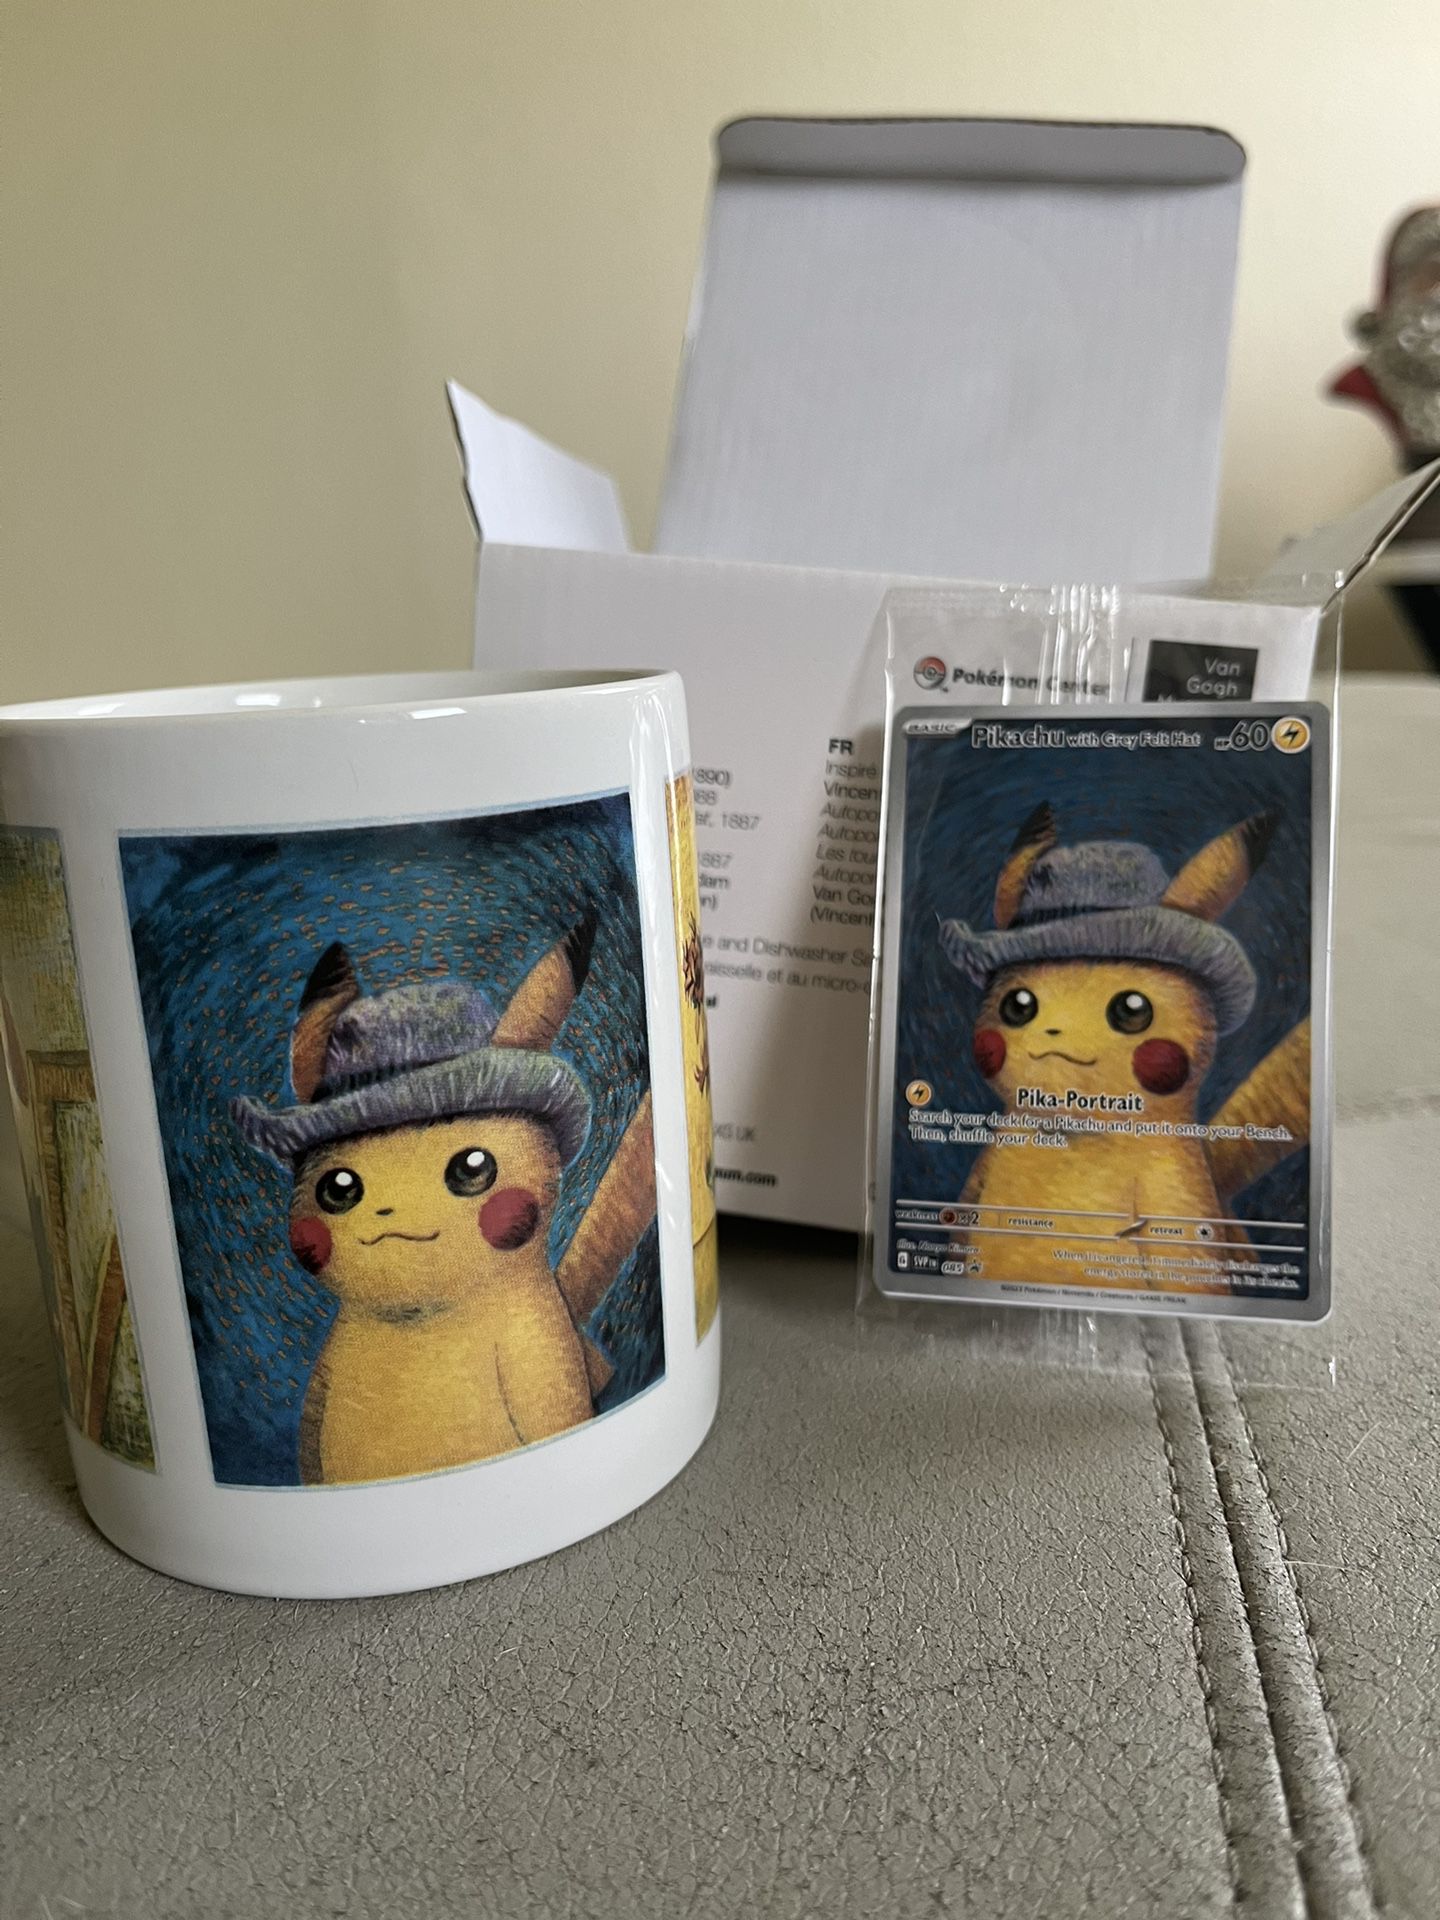 Promo card Pikachu with grey felt hat Pokémon x Van Gogh Museum + Mug